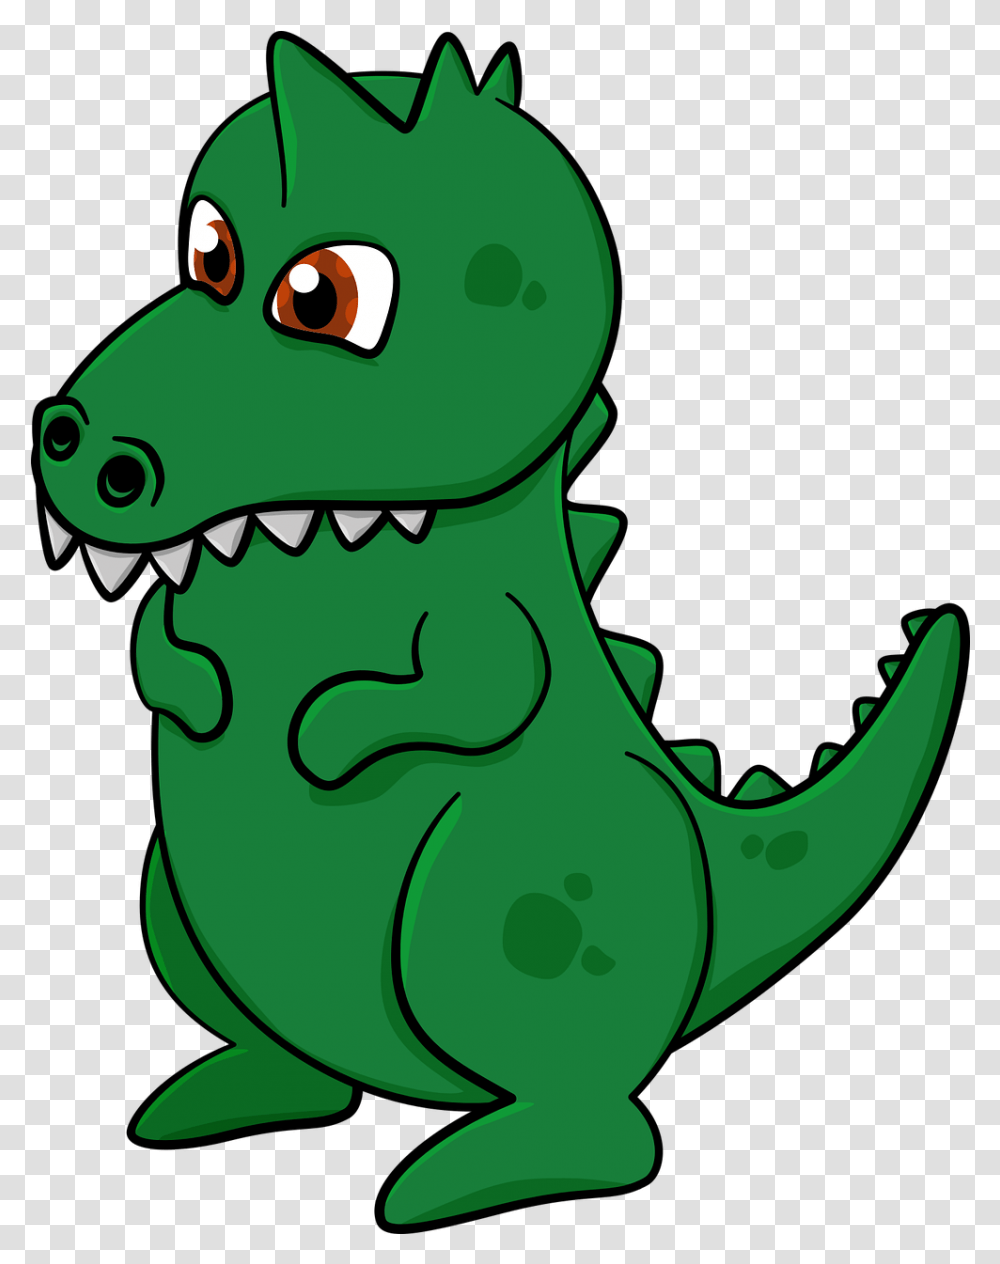 Godzilla Dinosaur Trex Dinosaur, Dragon, Reptile, Animal, Green Transparent Png